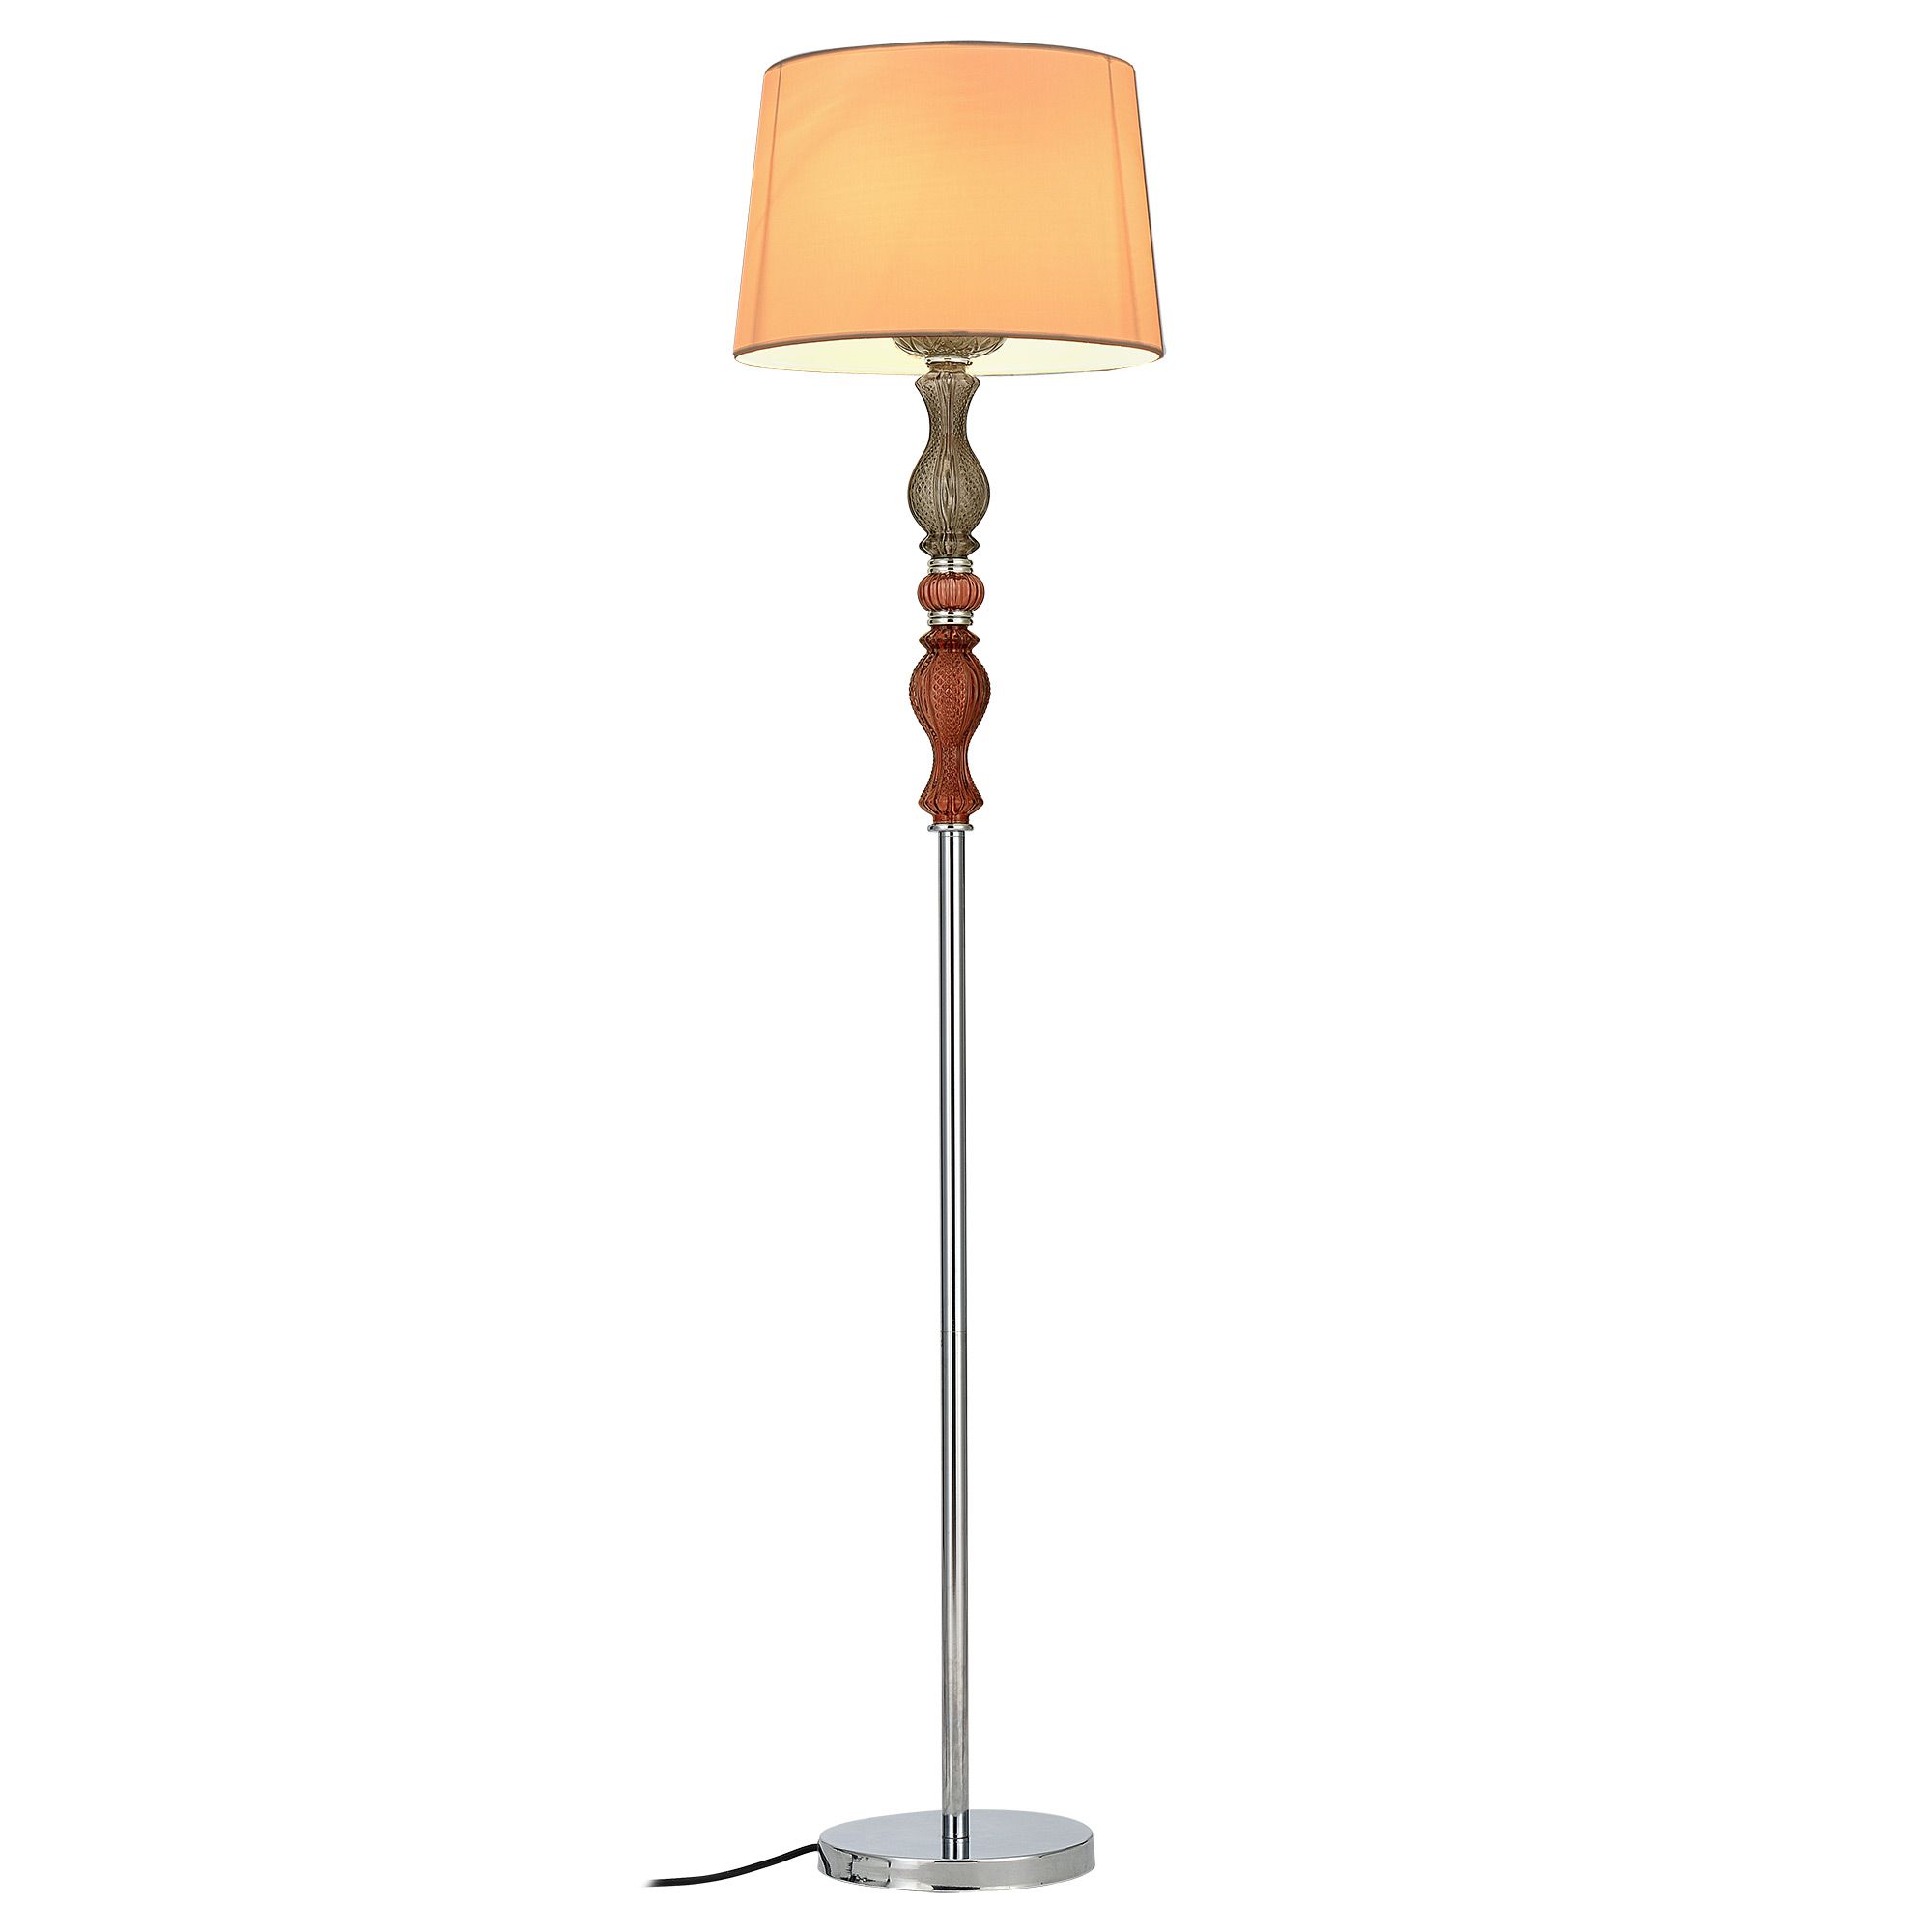 [lux.pro] Stojací lampa \"LandLord\" HT167492 - H.T. Trade Service GmbH & Co. KG